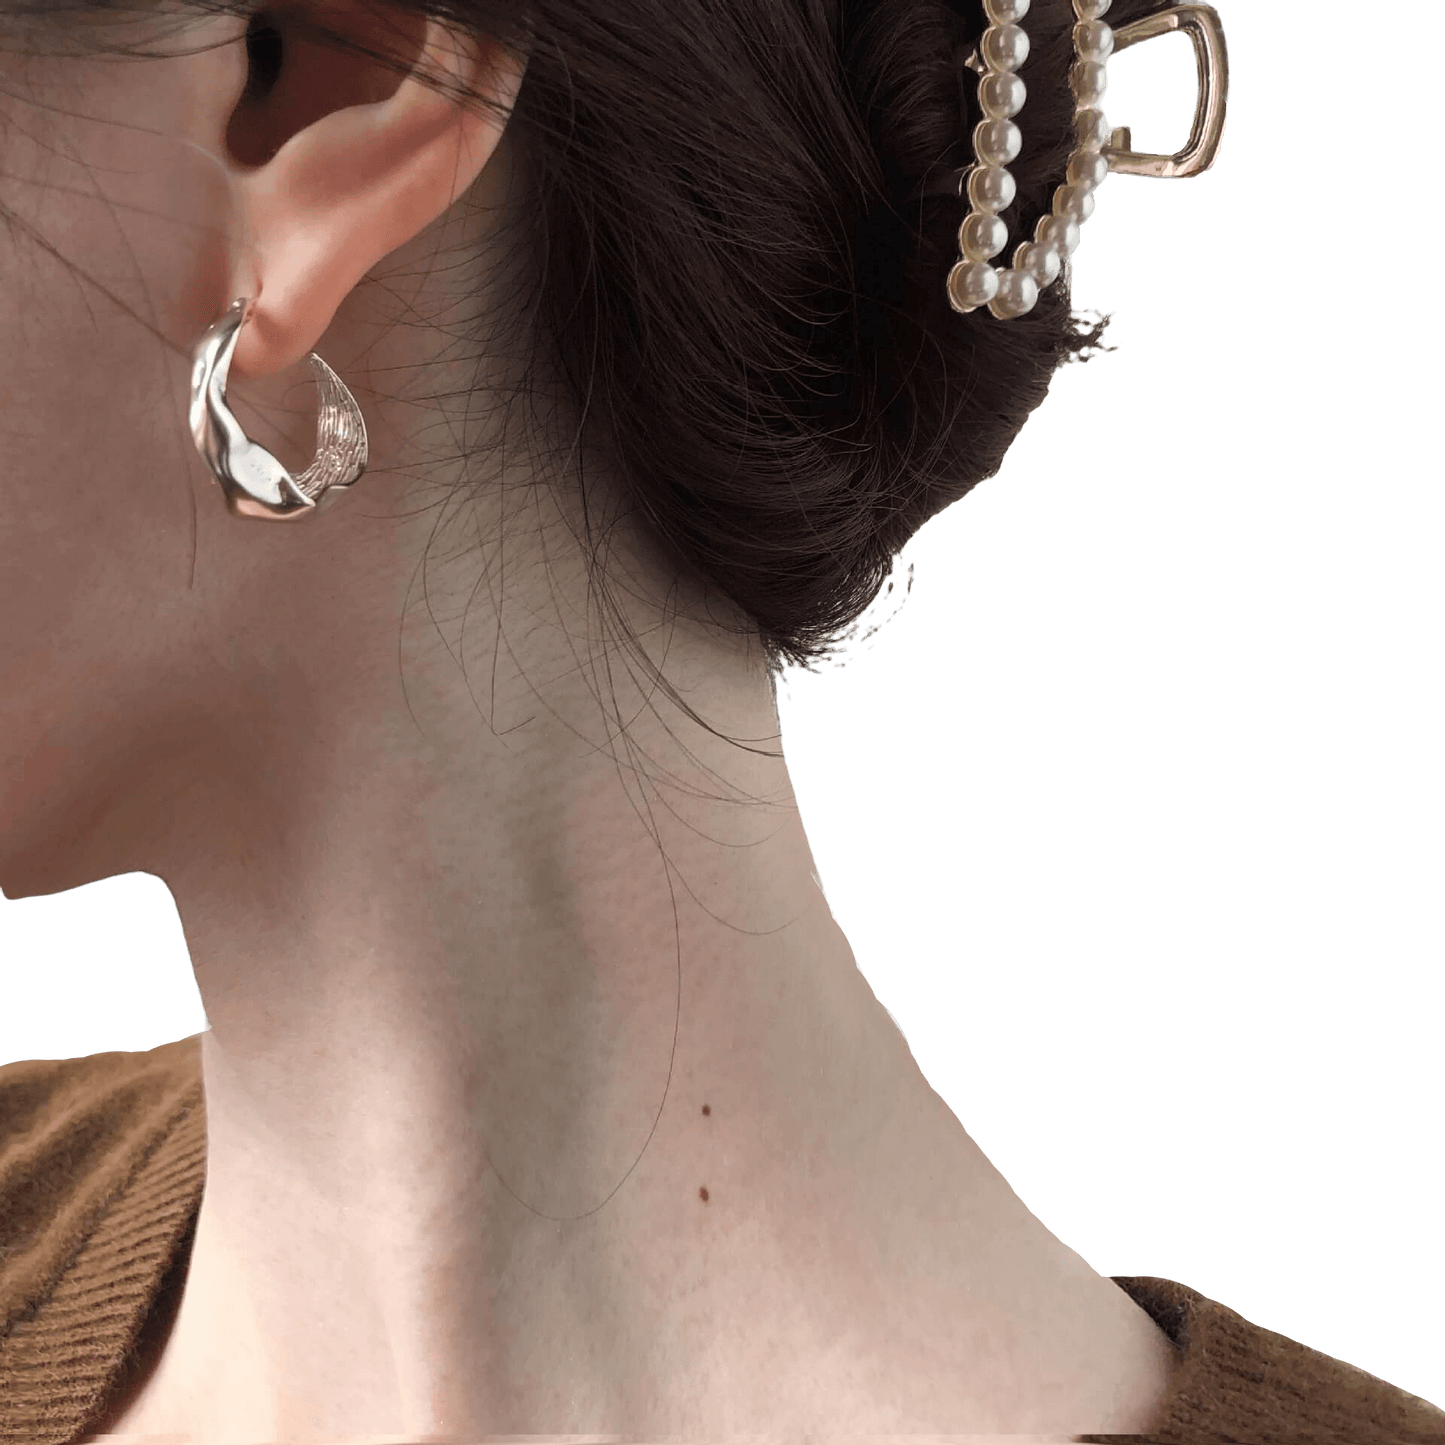 Irregular Shaped Metal Earrings